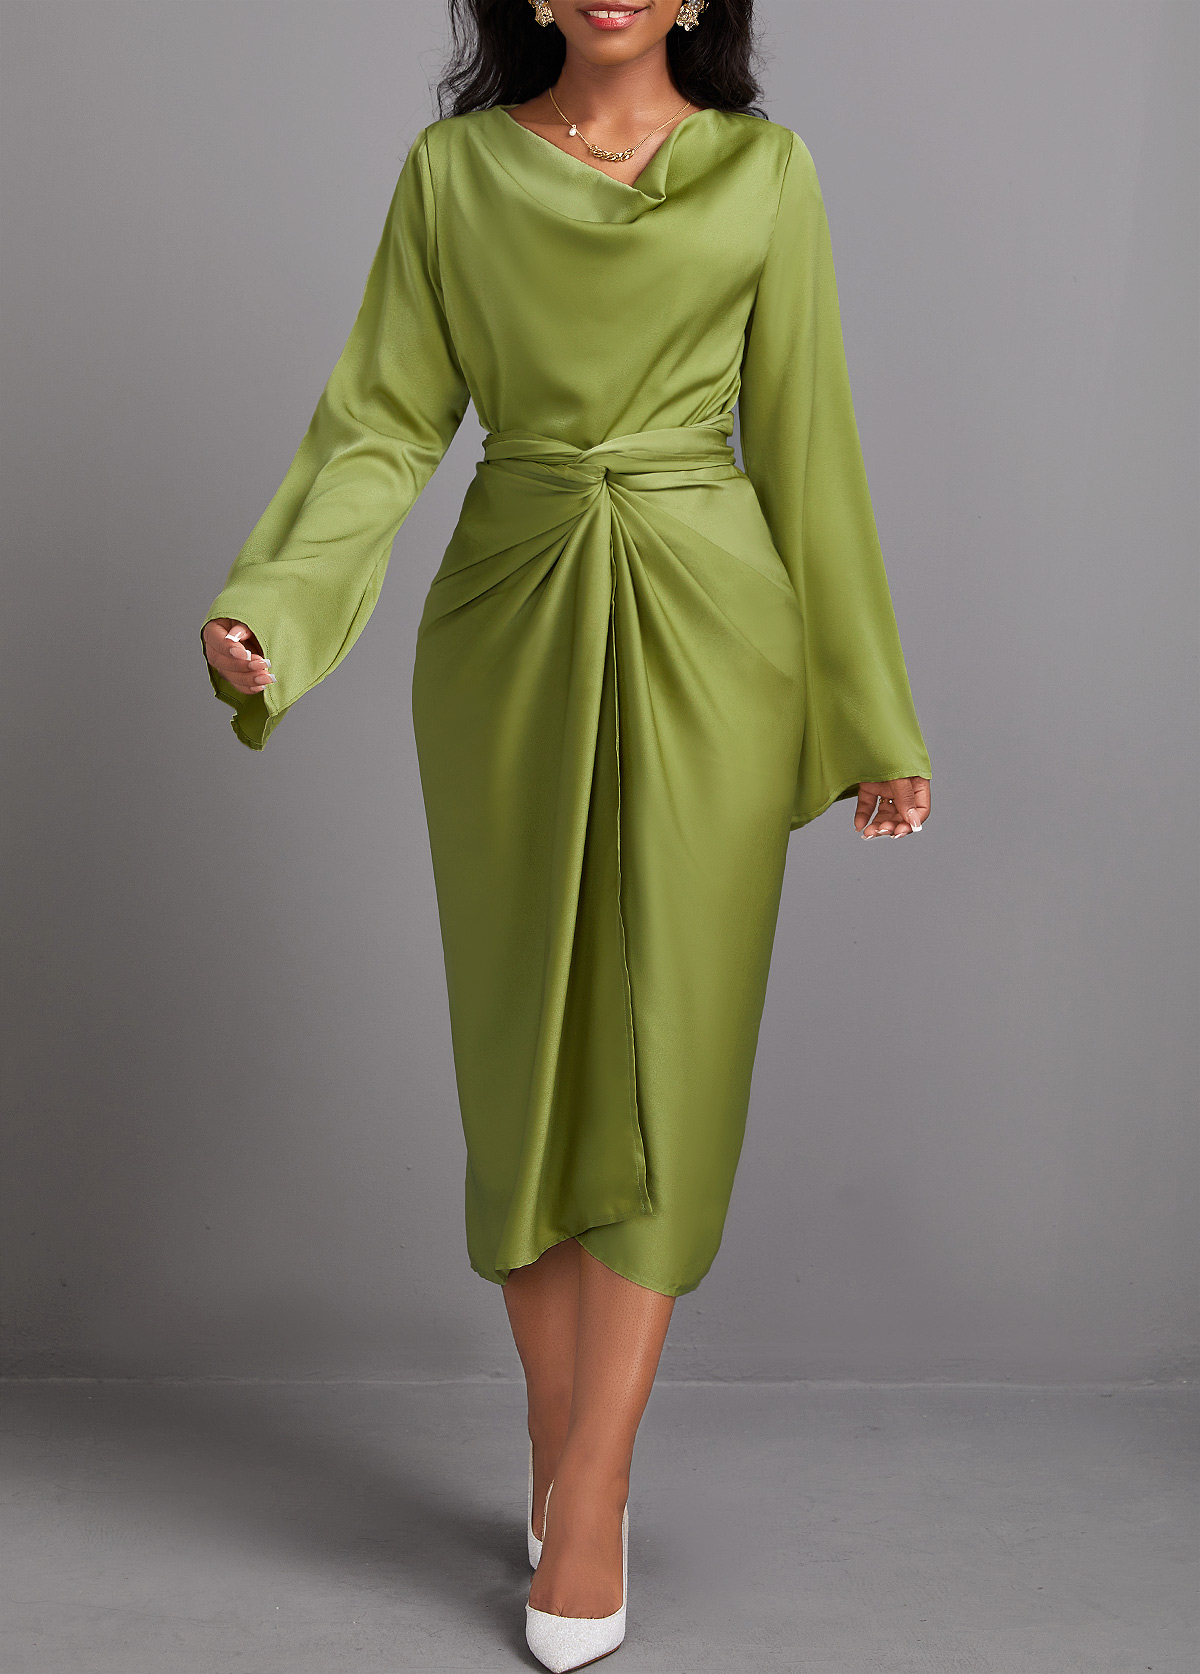 Two Piece Avocado Green Long Sleeve Top and Bodycon Skirt